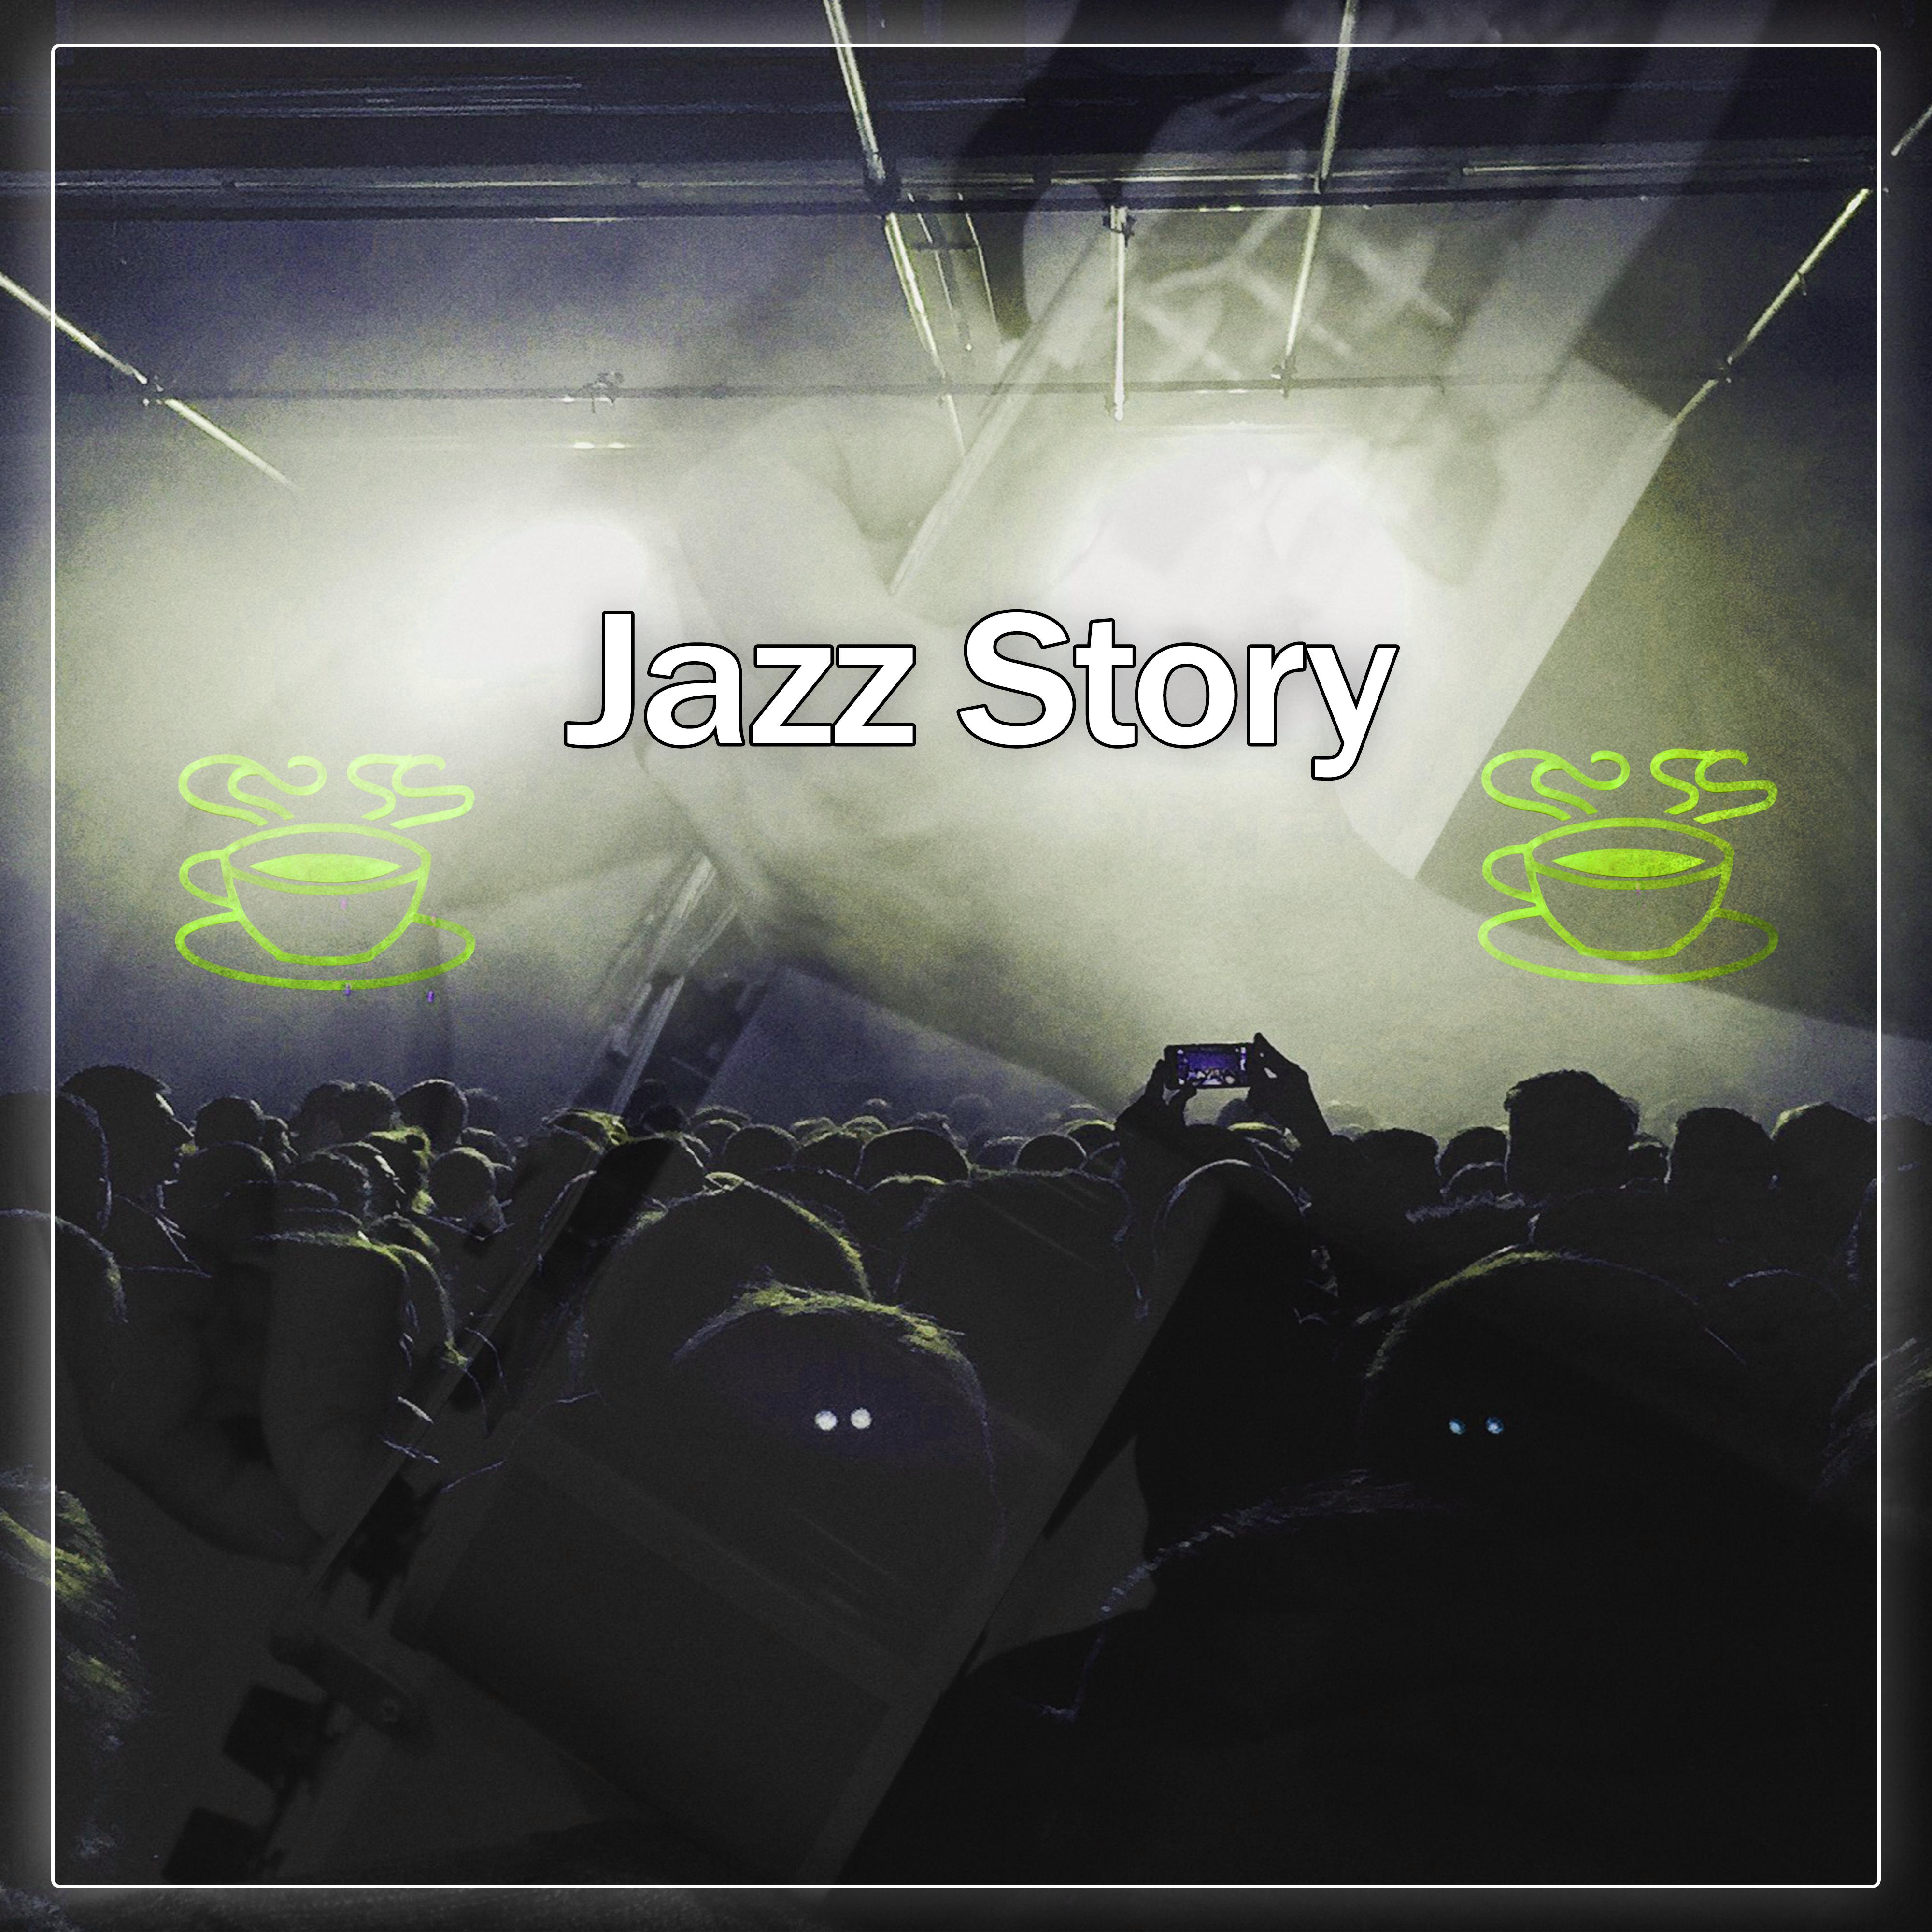 Jazz Story  Ambient Jazz Music, Ultimate Guitar, Piano Bar, Jazz Saxophone